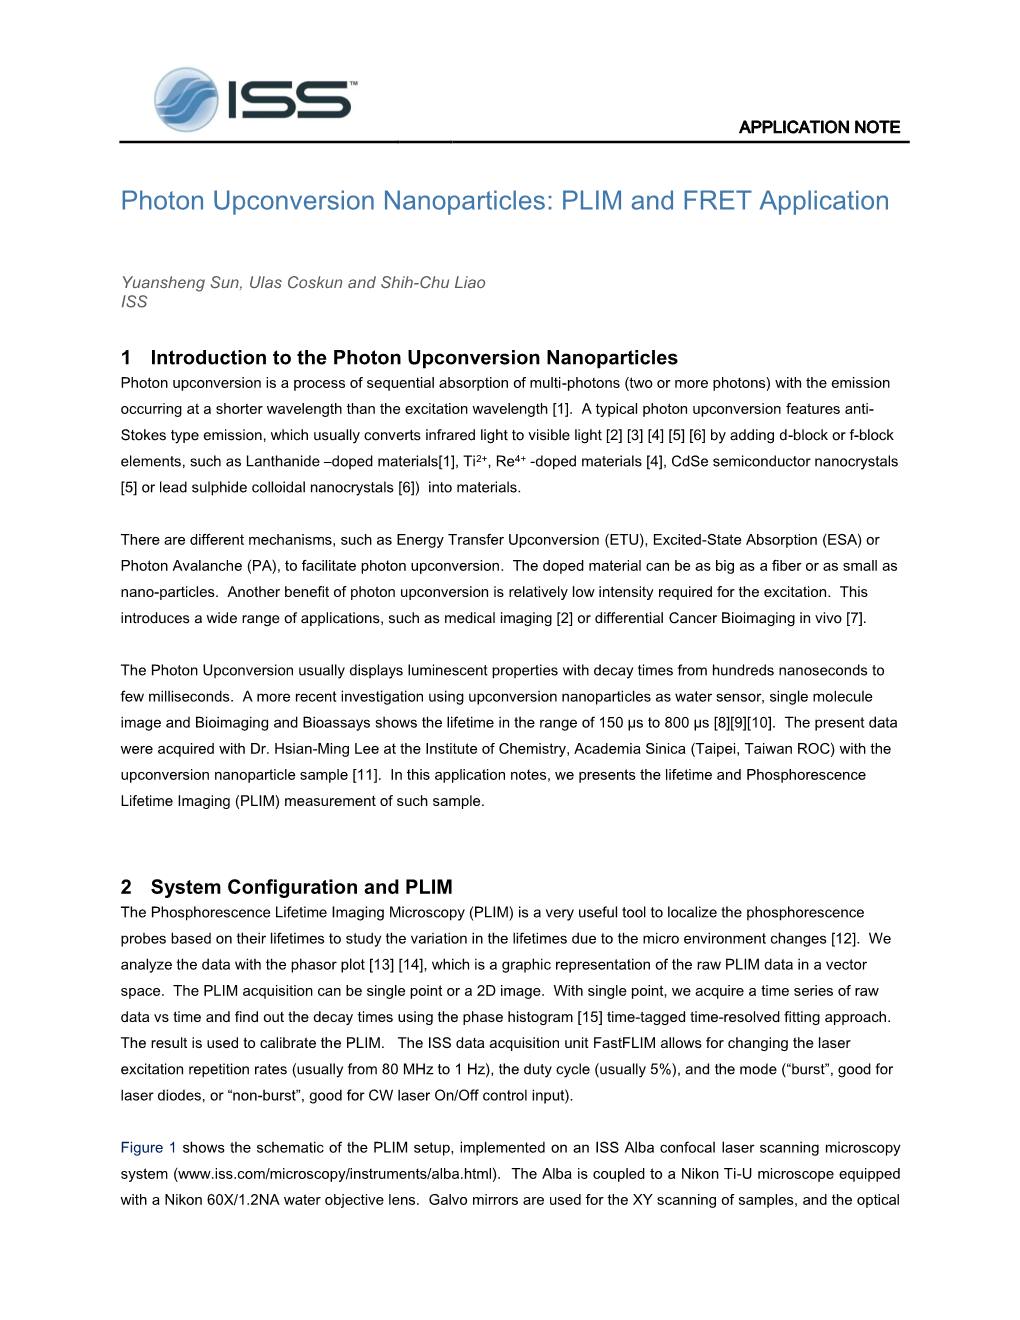 Photon Upconversion Nanoparticles: PLIM and FRET Application